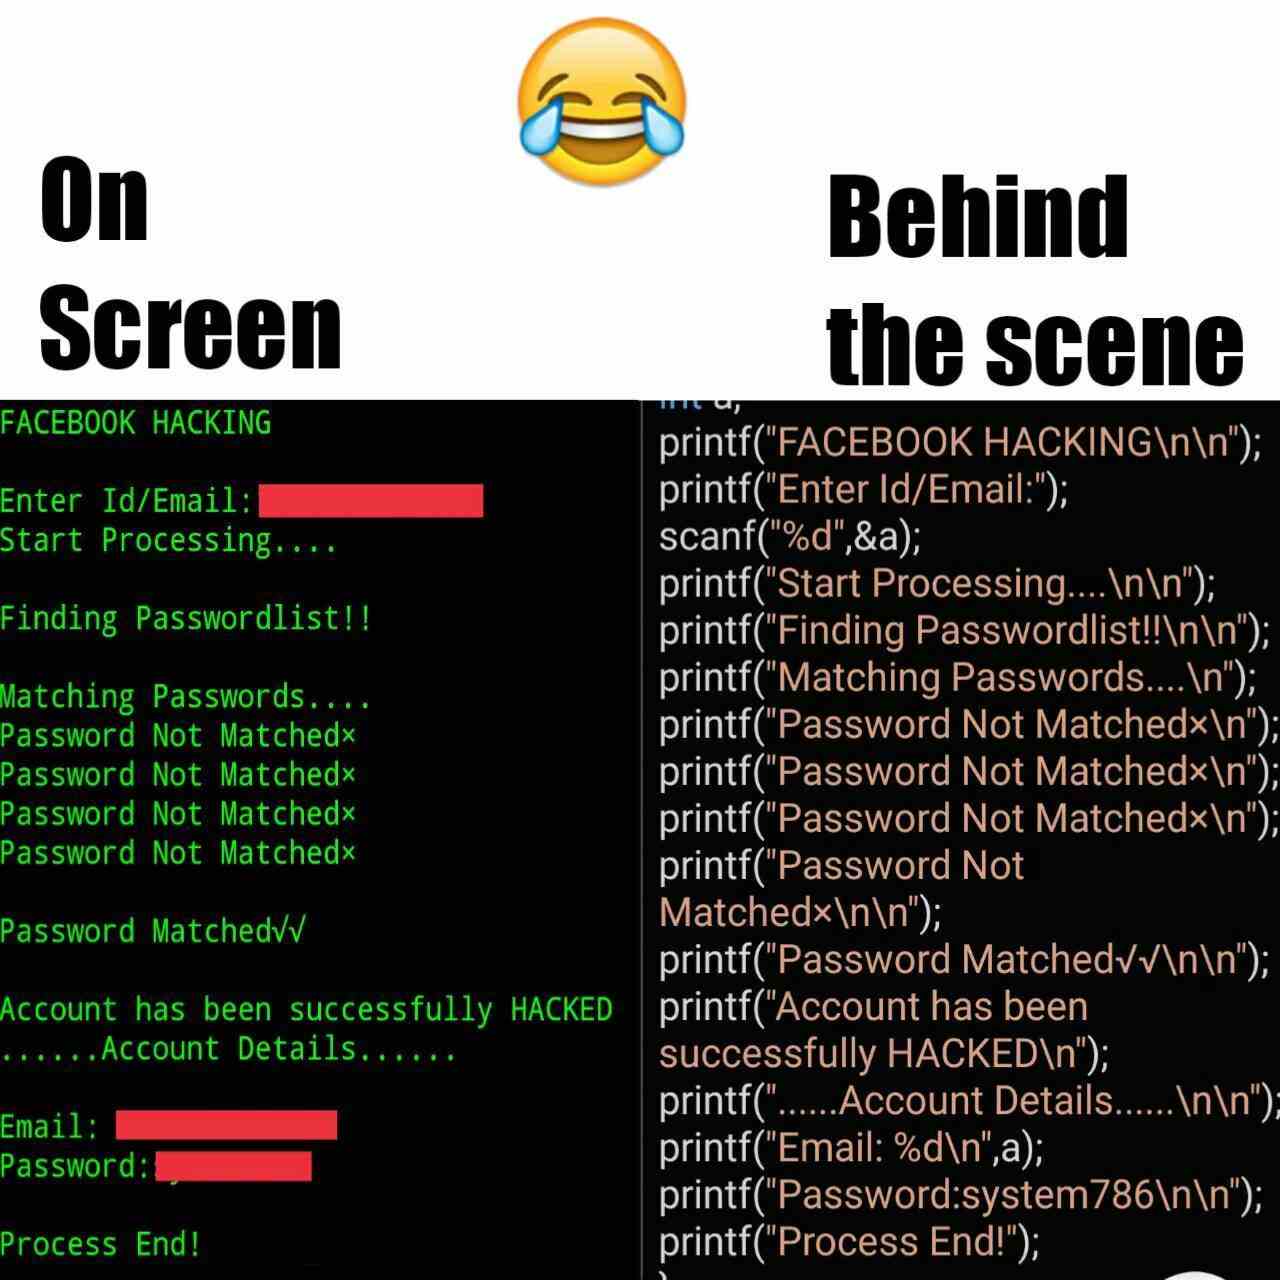 On Screen vs Behind the Scene